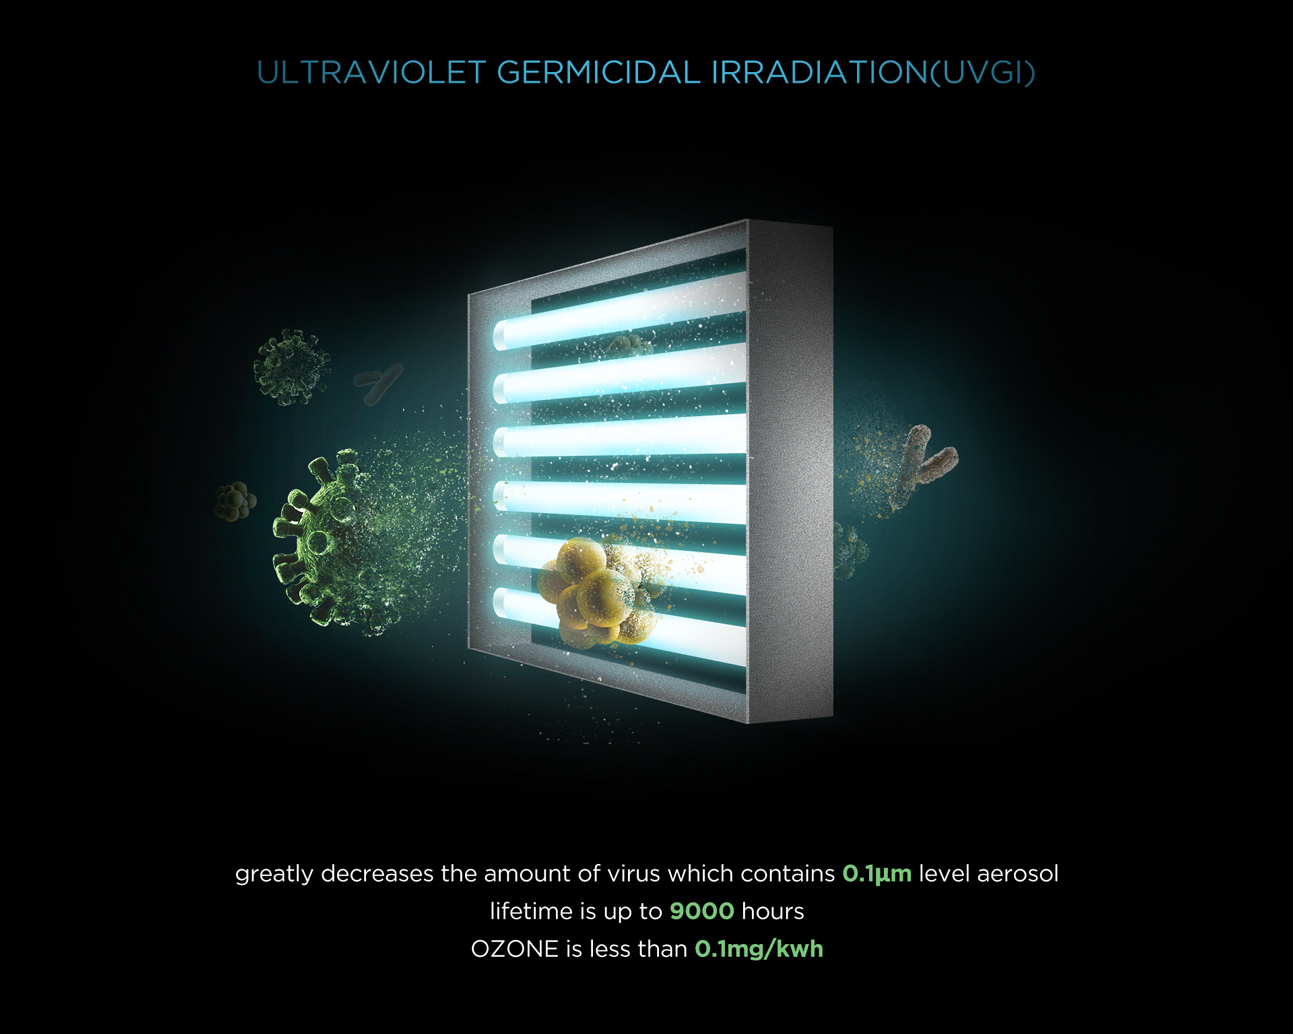 Ultraviolet Germidical Irradiation